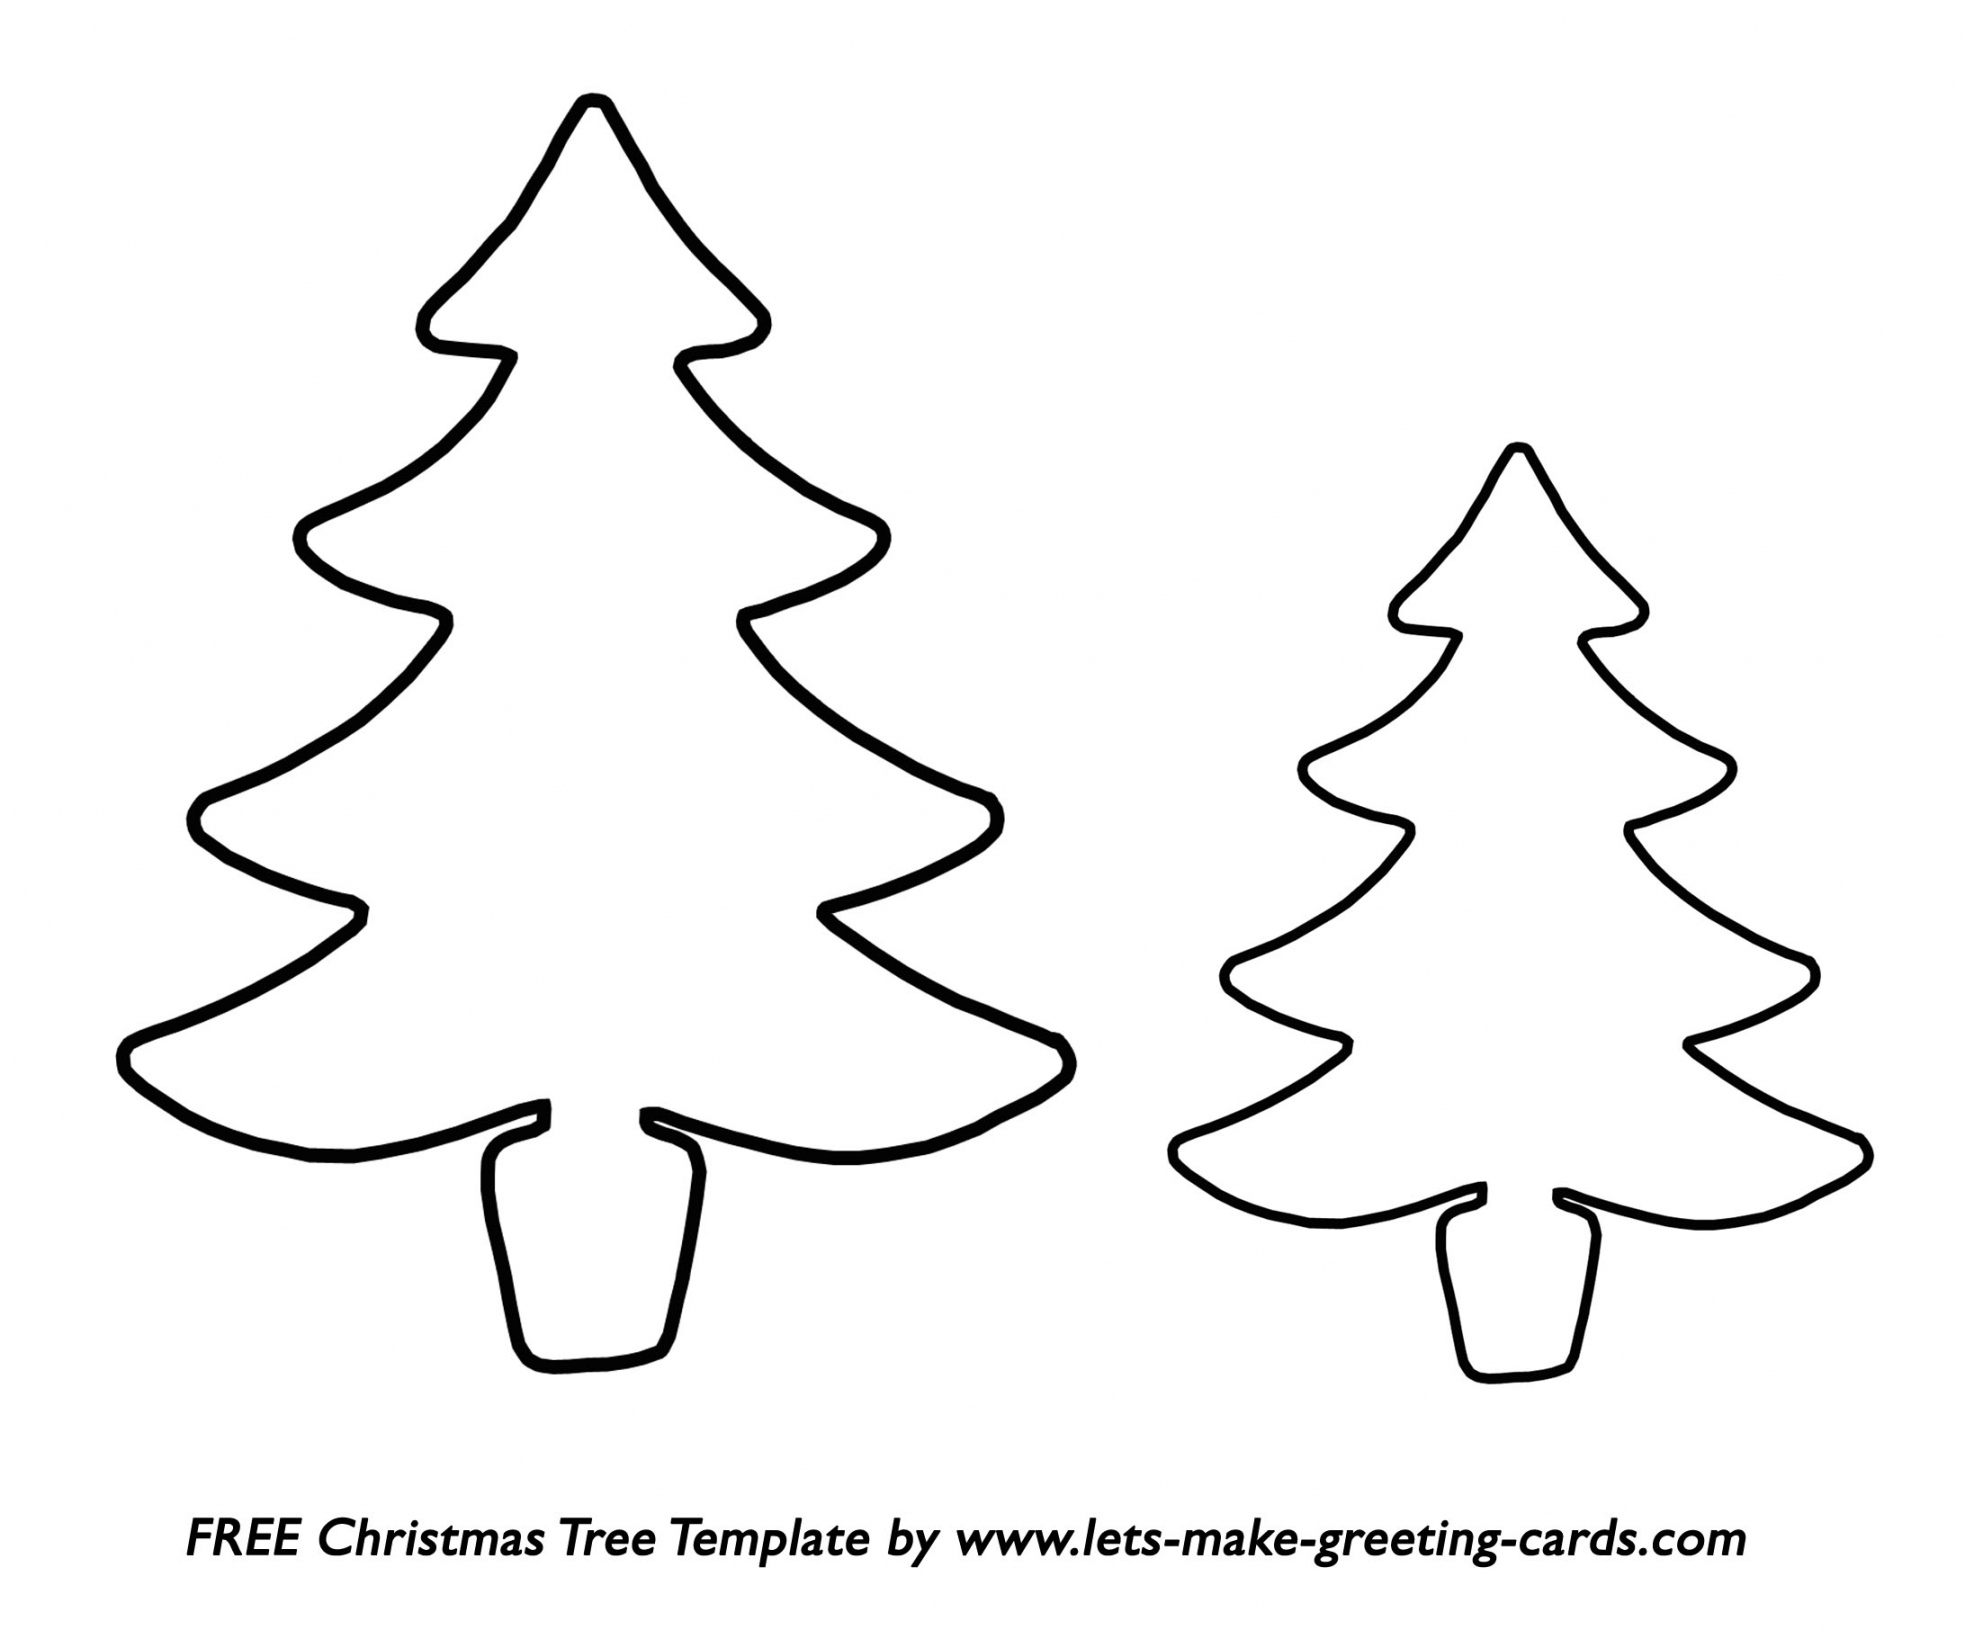 Free Christmas Tree Templates - FREE Printables - Christmas Tree Stencil Printable